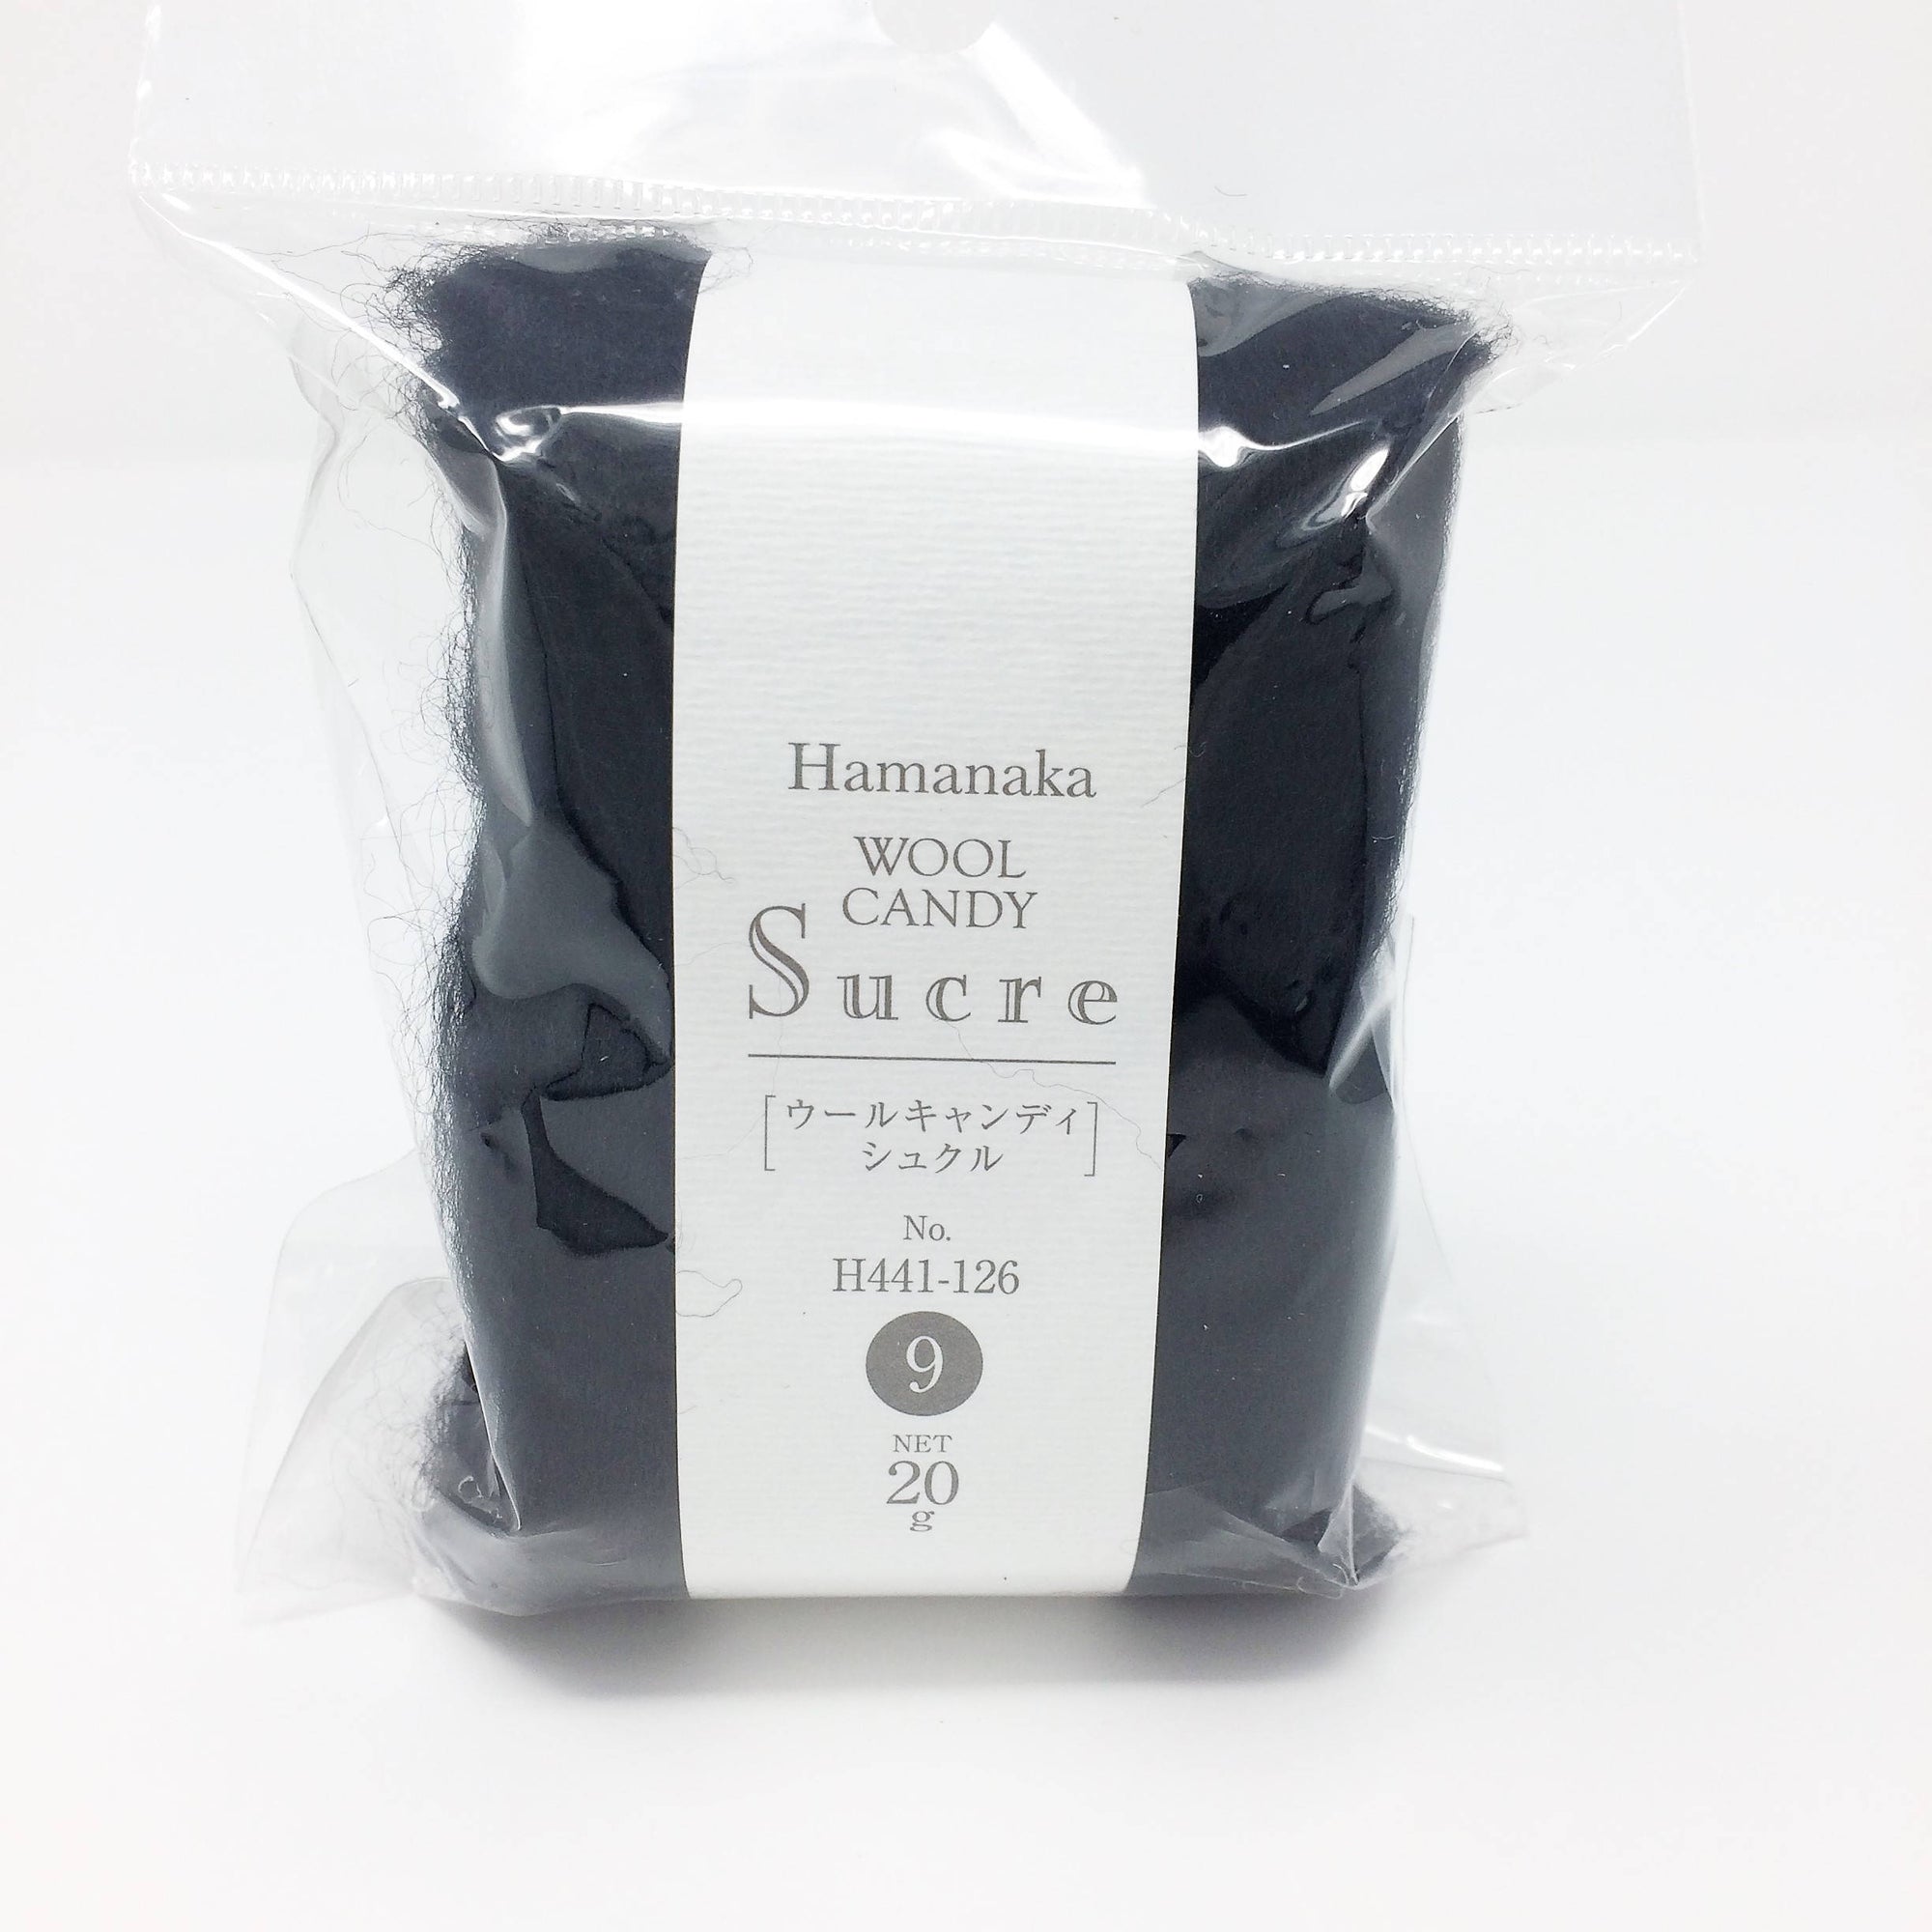 Hamanaka Wool Candy Sucre - Black 20g